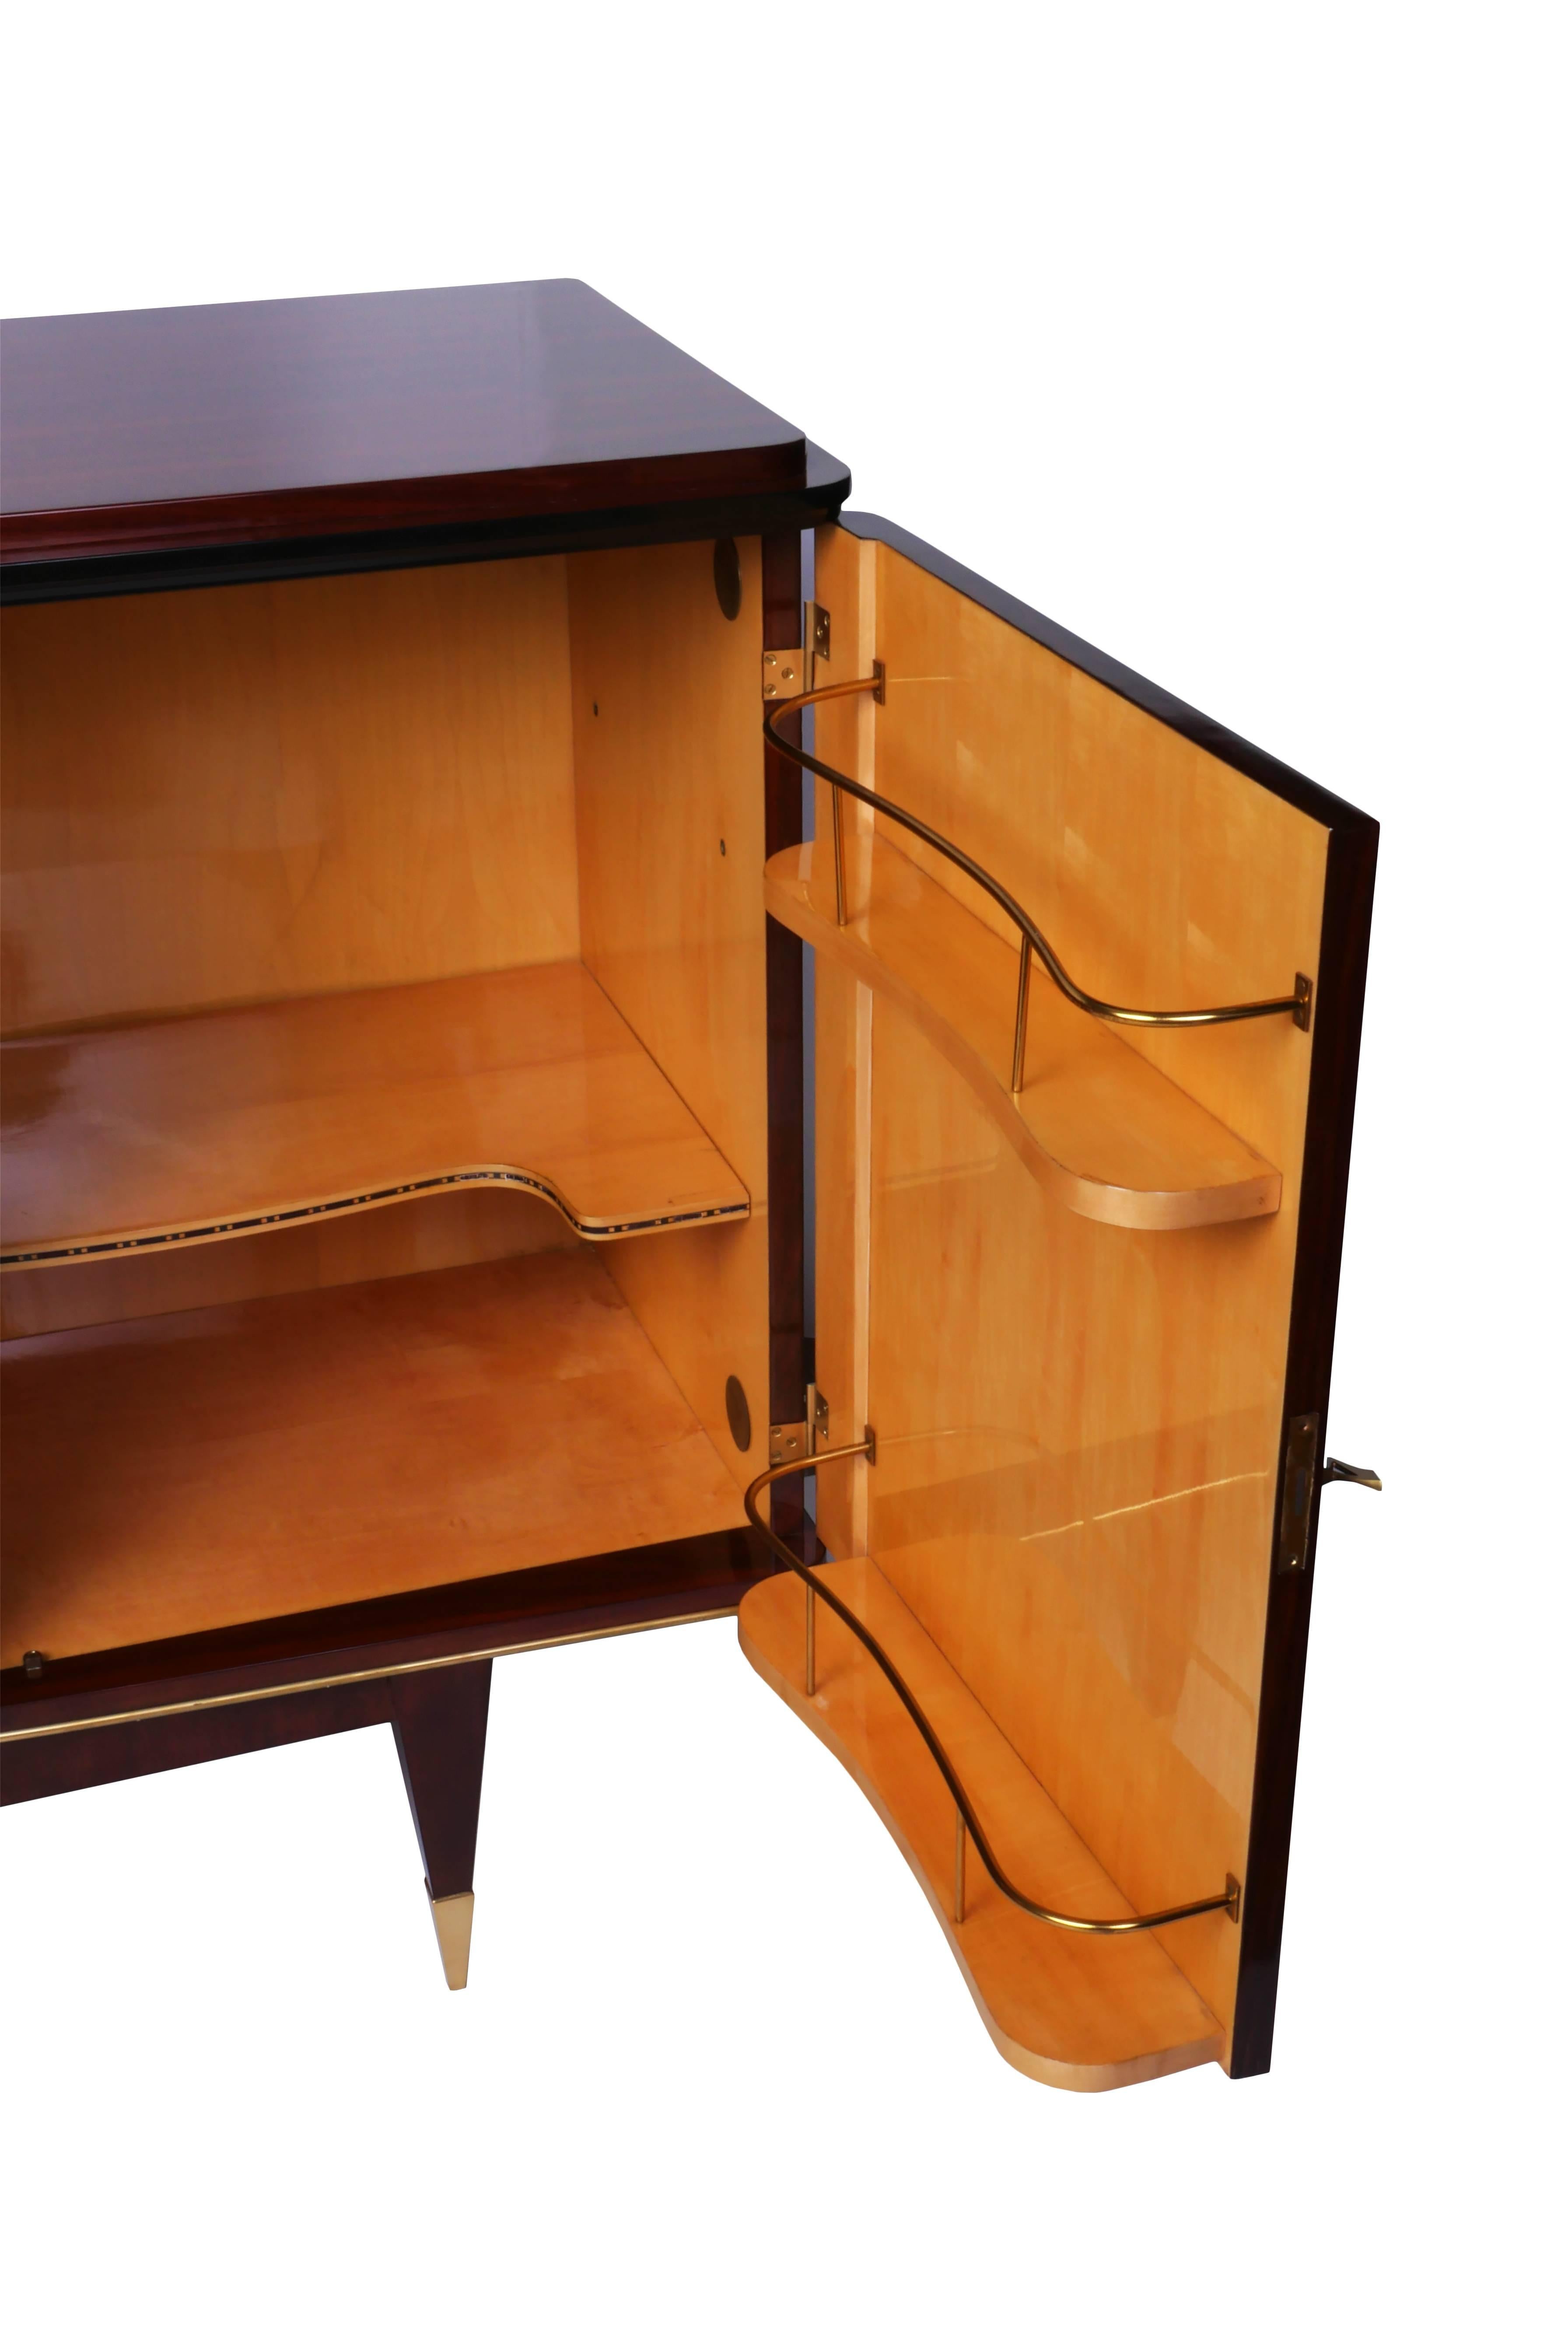 Wonderful French Art Deco Buffet or Sideboard in Frame Mahogany 1